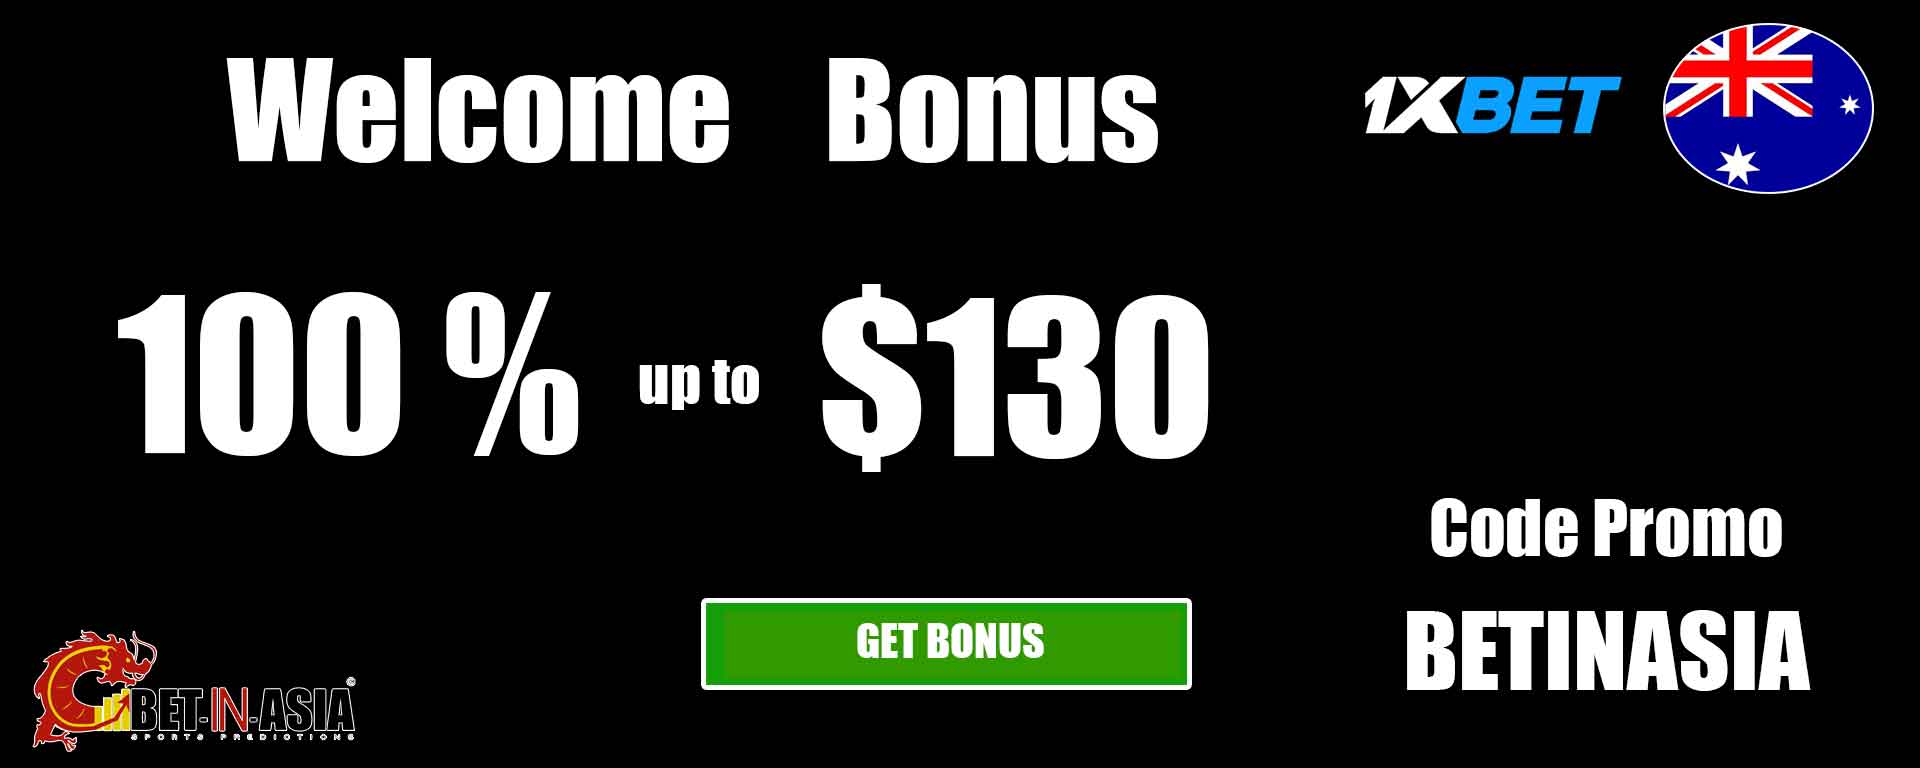 1xbet Australia welcome bonus 100 % on first deposit